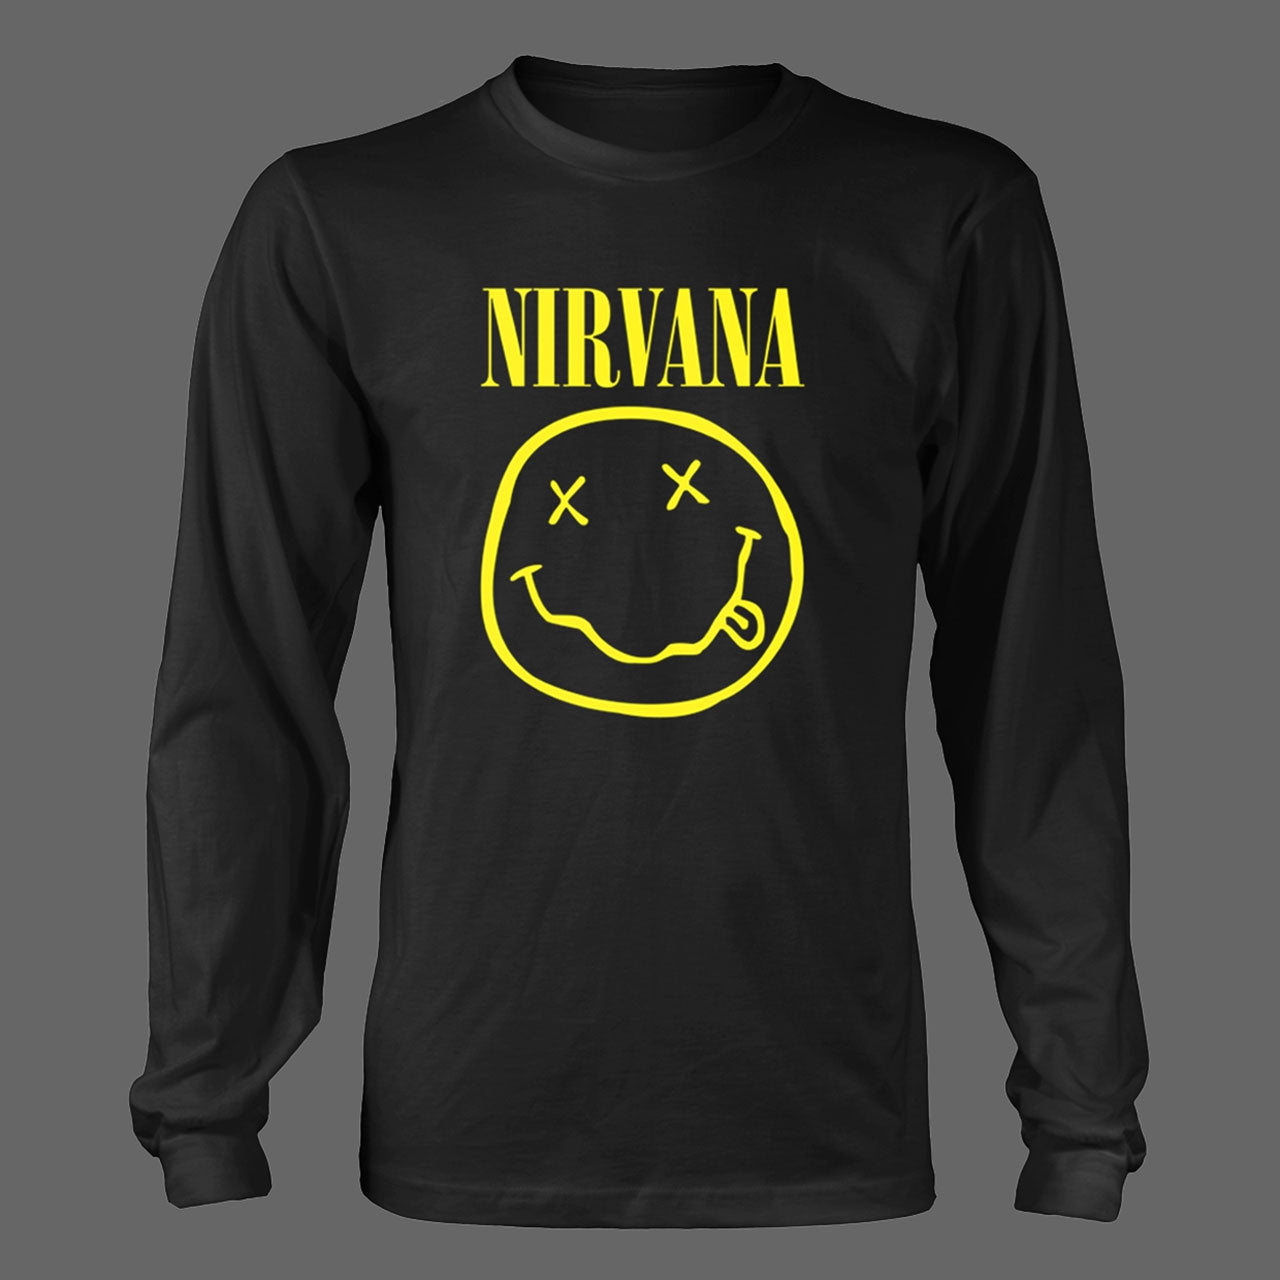 Nirvana - Smiley Face Logo (Long Sleeve T-Shirt)